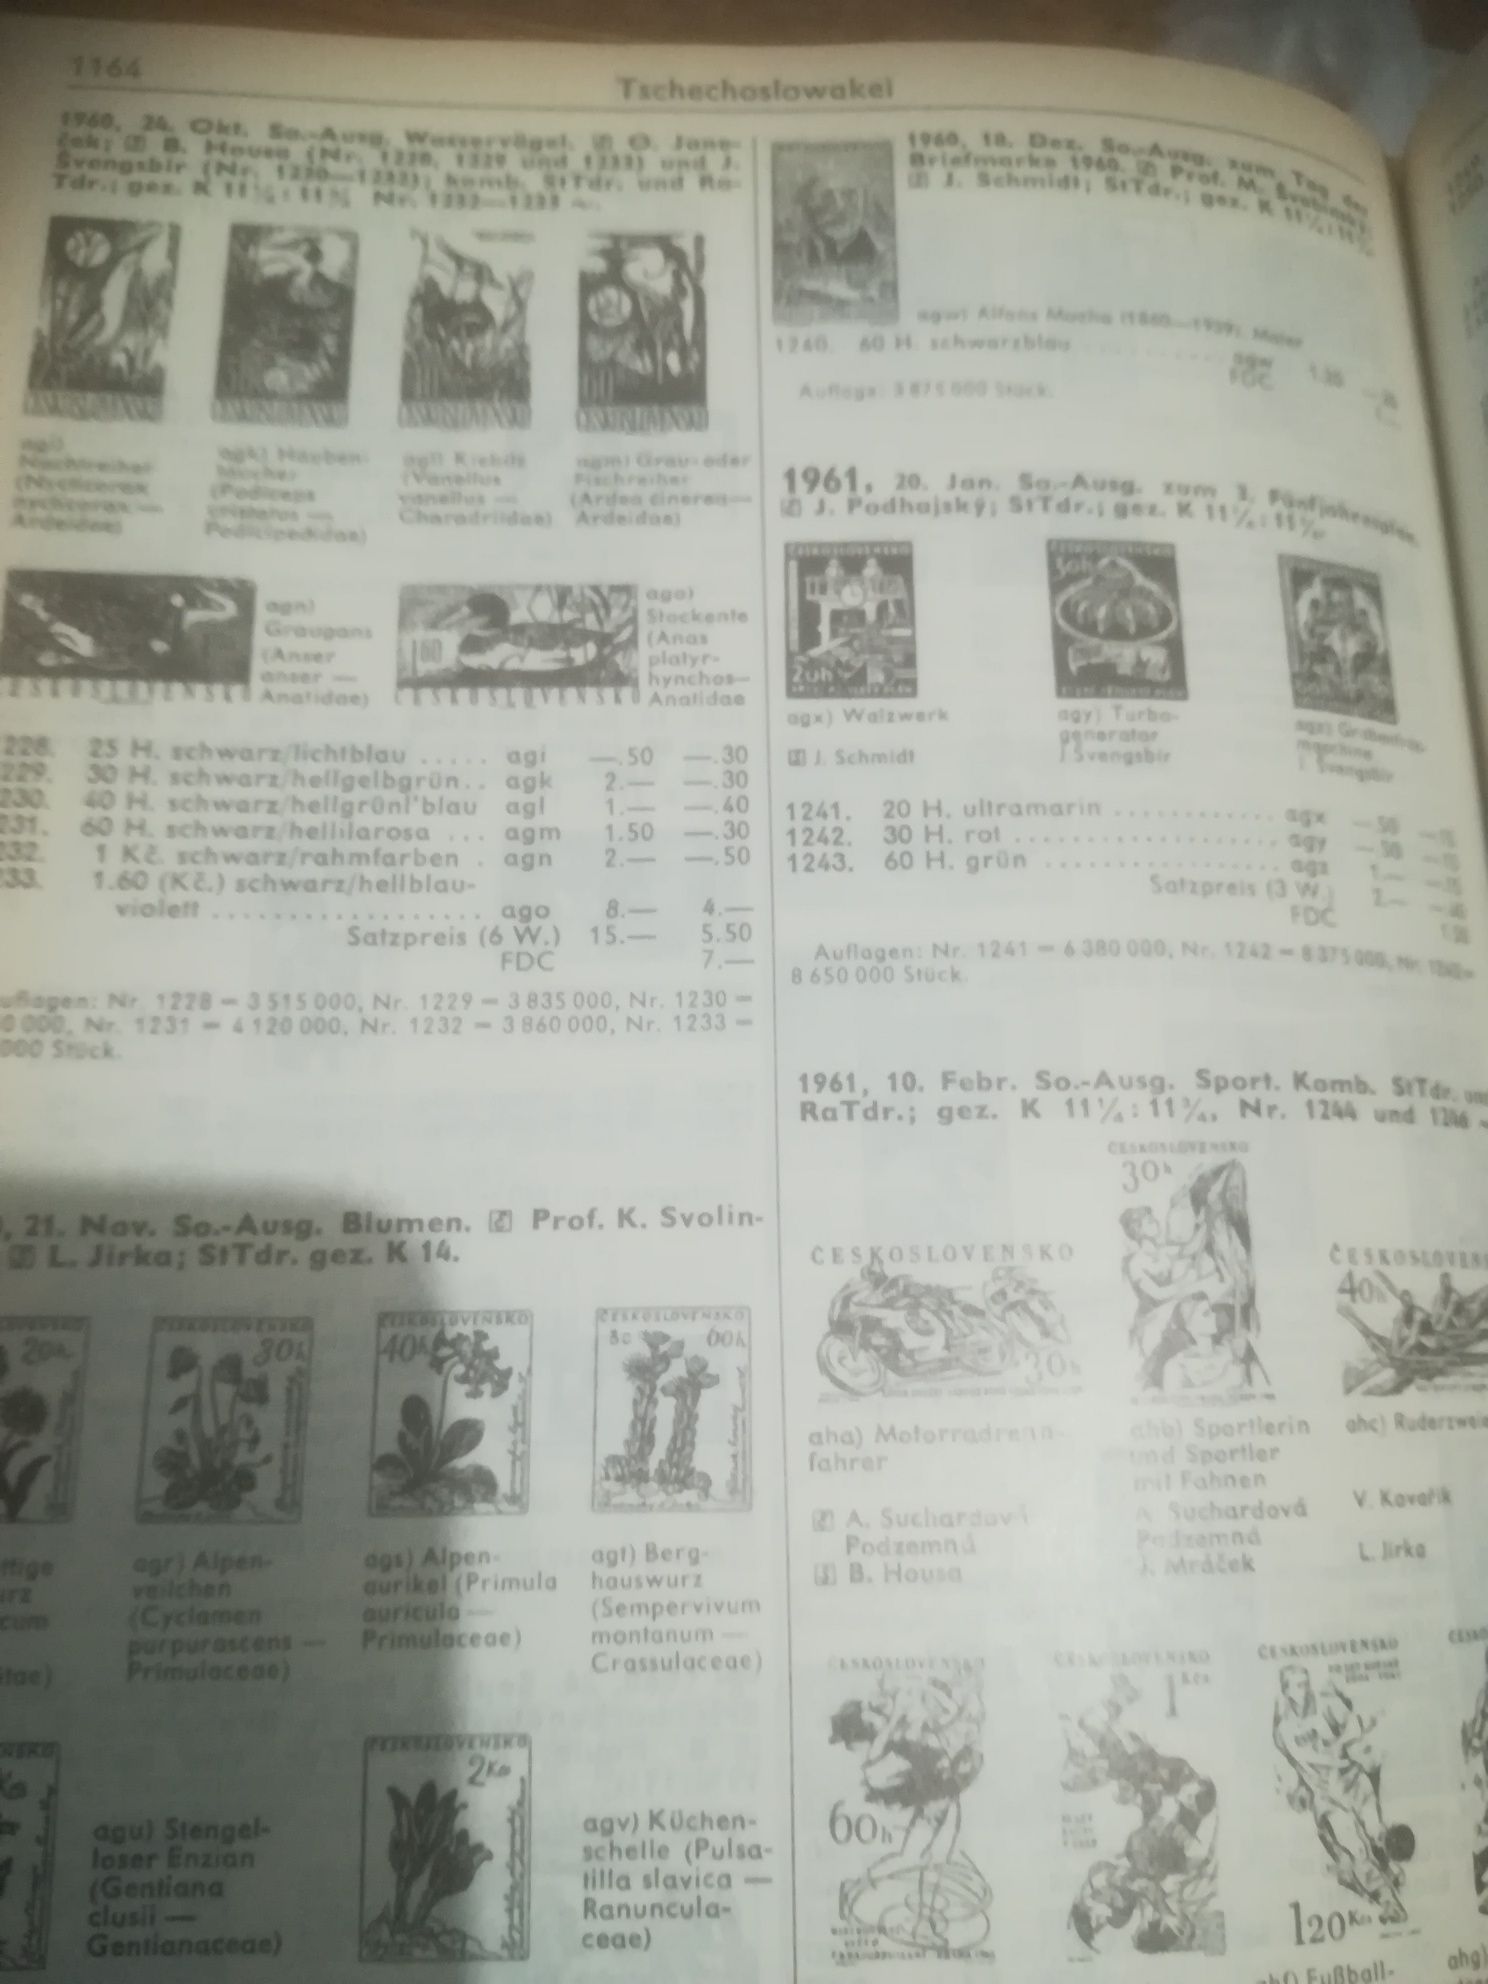 :europa-katalog ost 1989/1990,michel.+